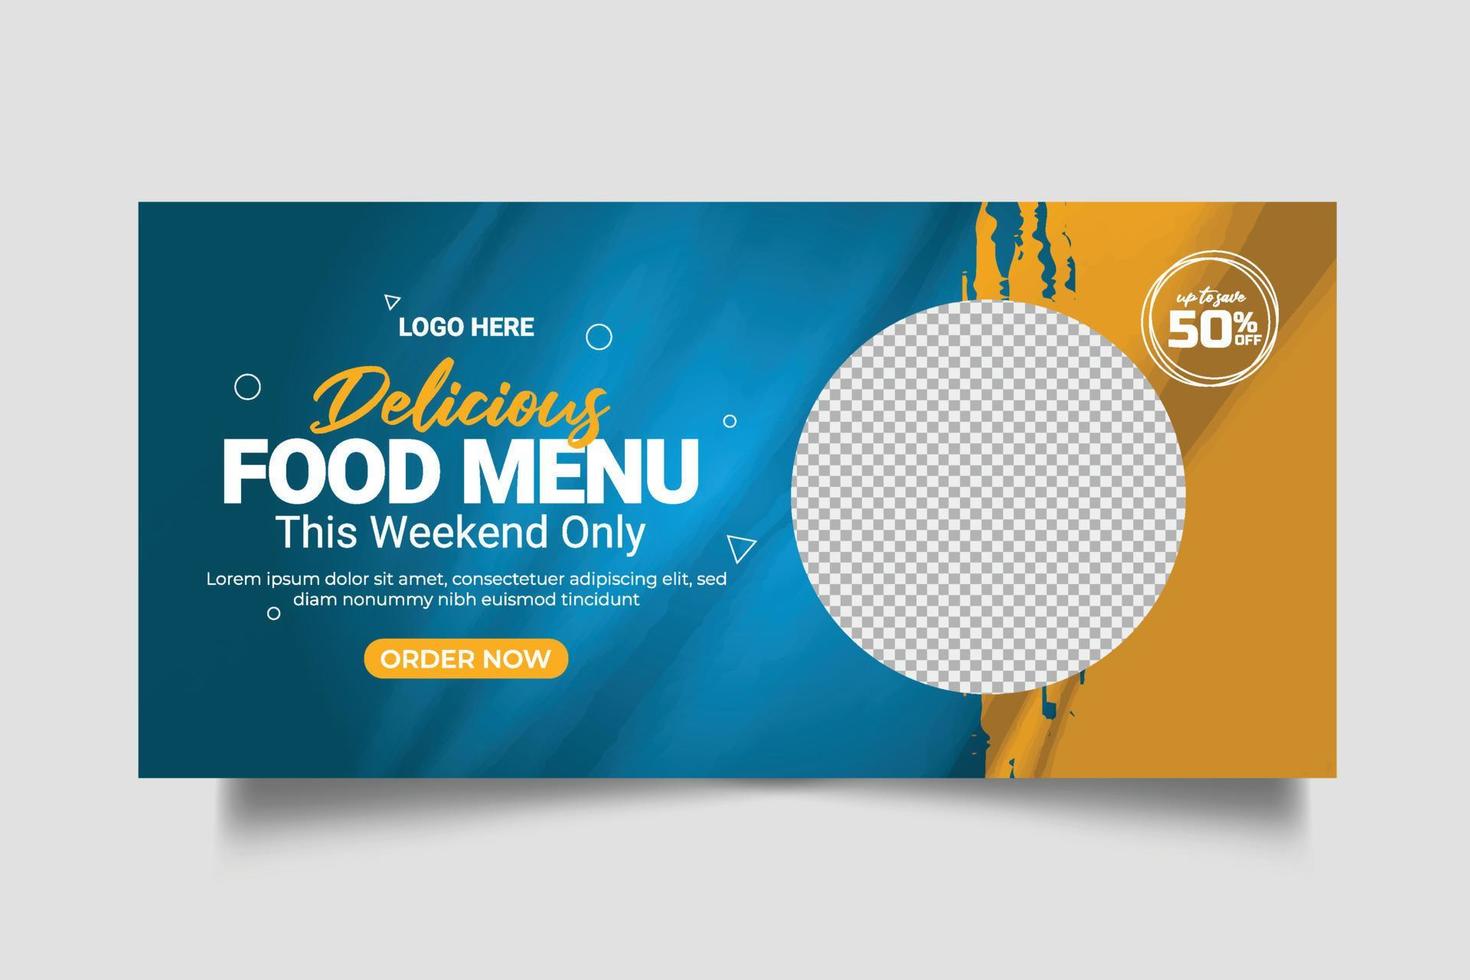 voedsel menu web banier sociaal media post met restaurant sociaal Hoes banier Promotie sjabloon vector